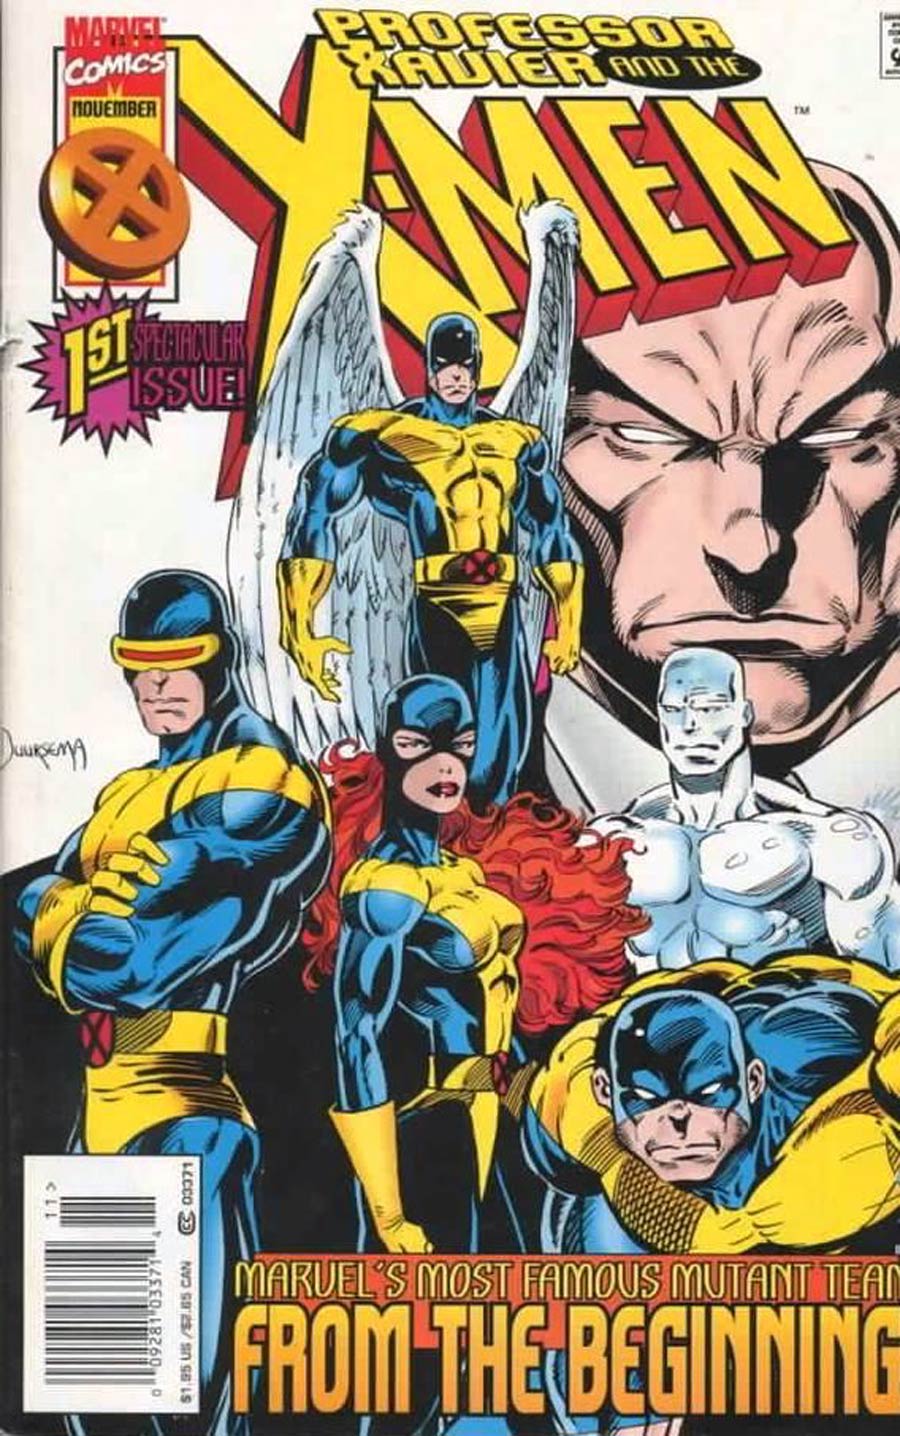 Professor Xavier And The X-Men #1 Cover B Flipbook